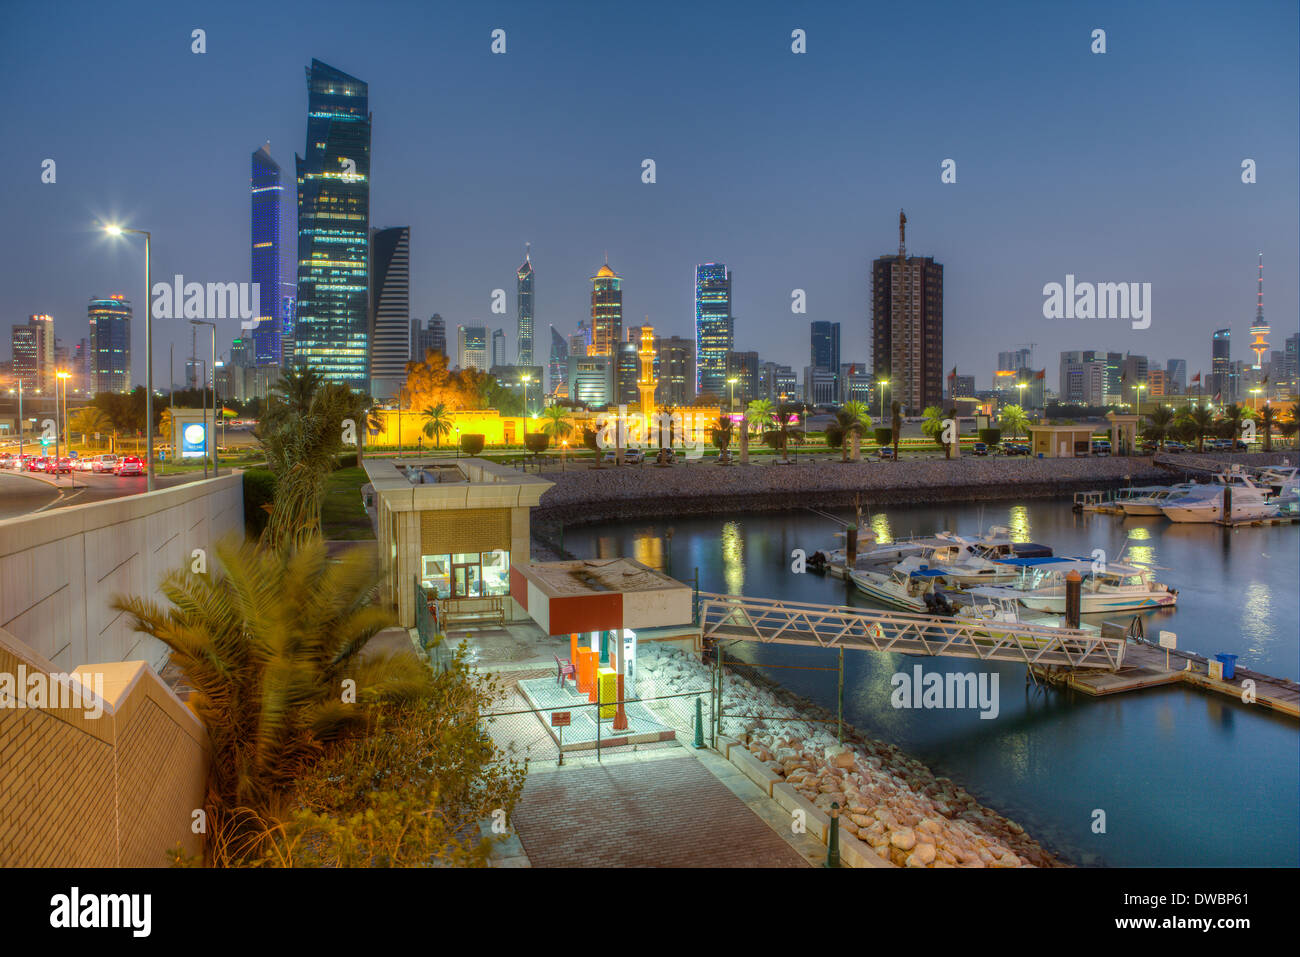 Souk Shark Mall and Kuwait harbour, Kuwait, Arabian Peninsula, illuminated at dusk Stock Photo